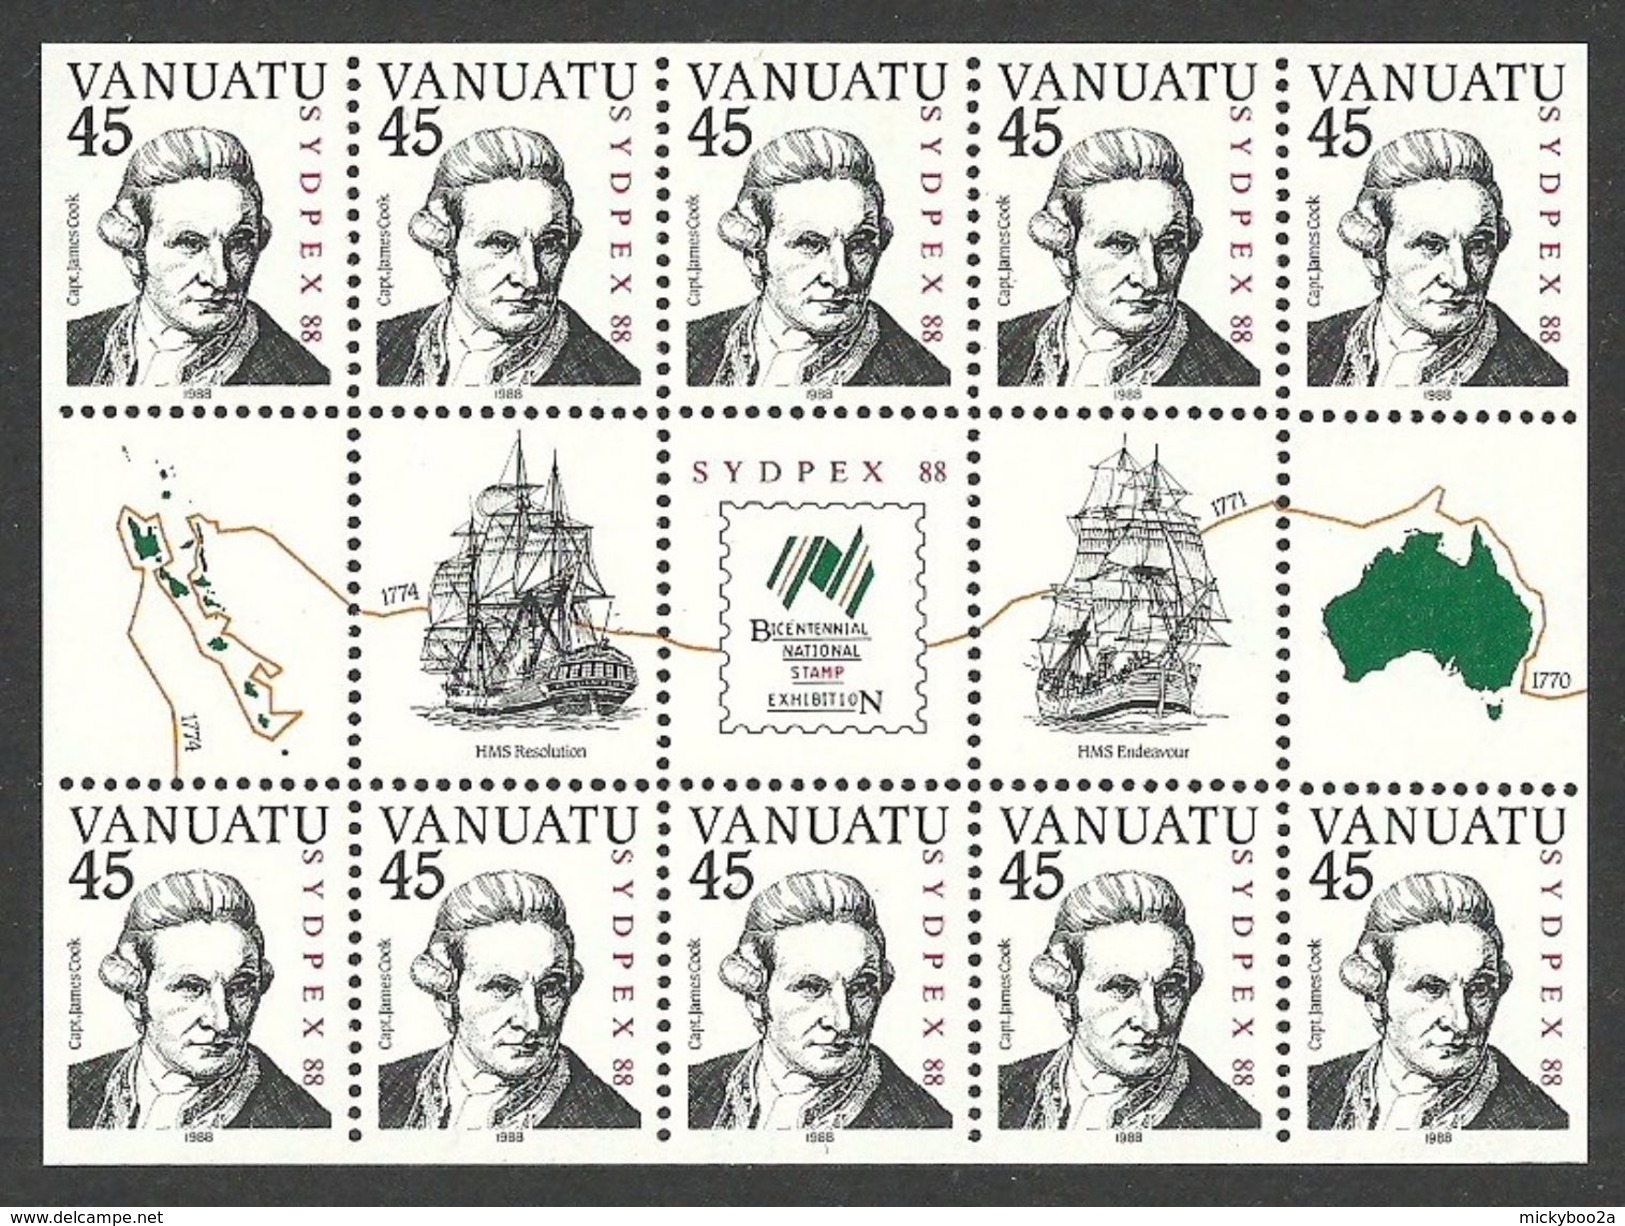 VANUATU 1988 SYDPEX SHIPS ENDEAVOUR RESOLUTION CAPTAIN COOK EXPLORER SHEET MNH - Vanuatu (1980-...)